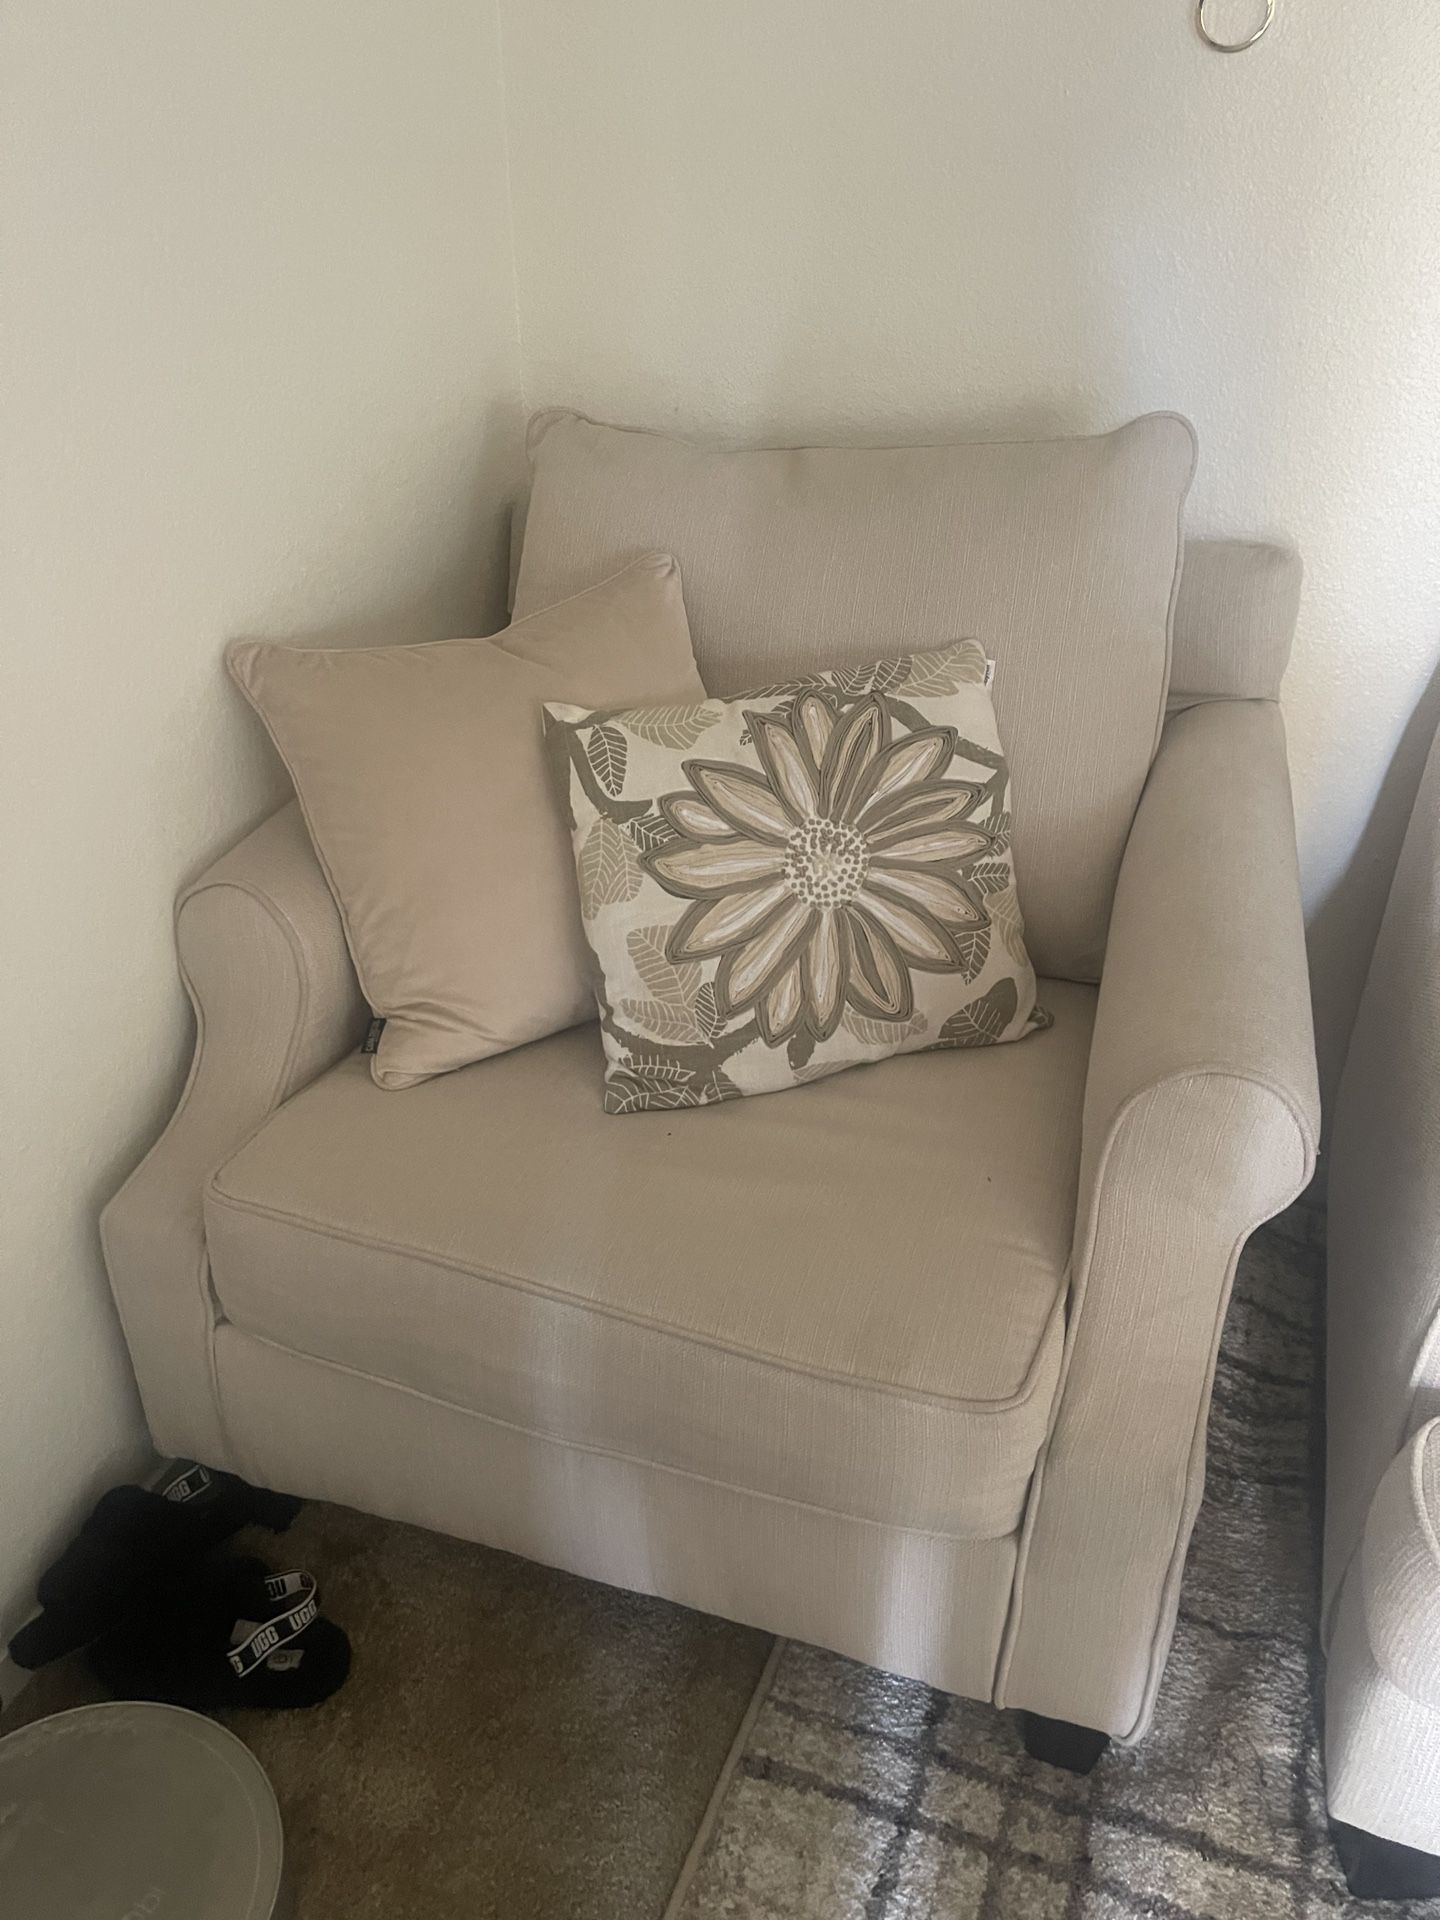 Sofa Couch Love Seat Chair - FREE - Smoke Free -Pet Free